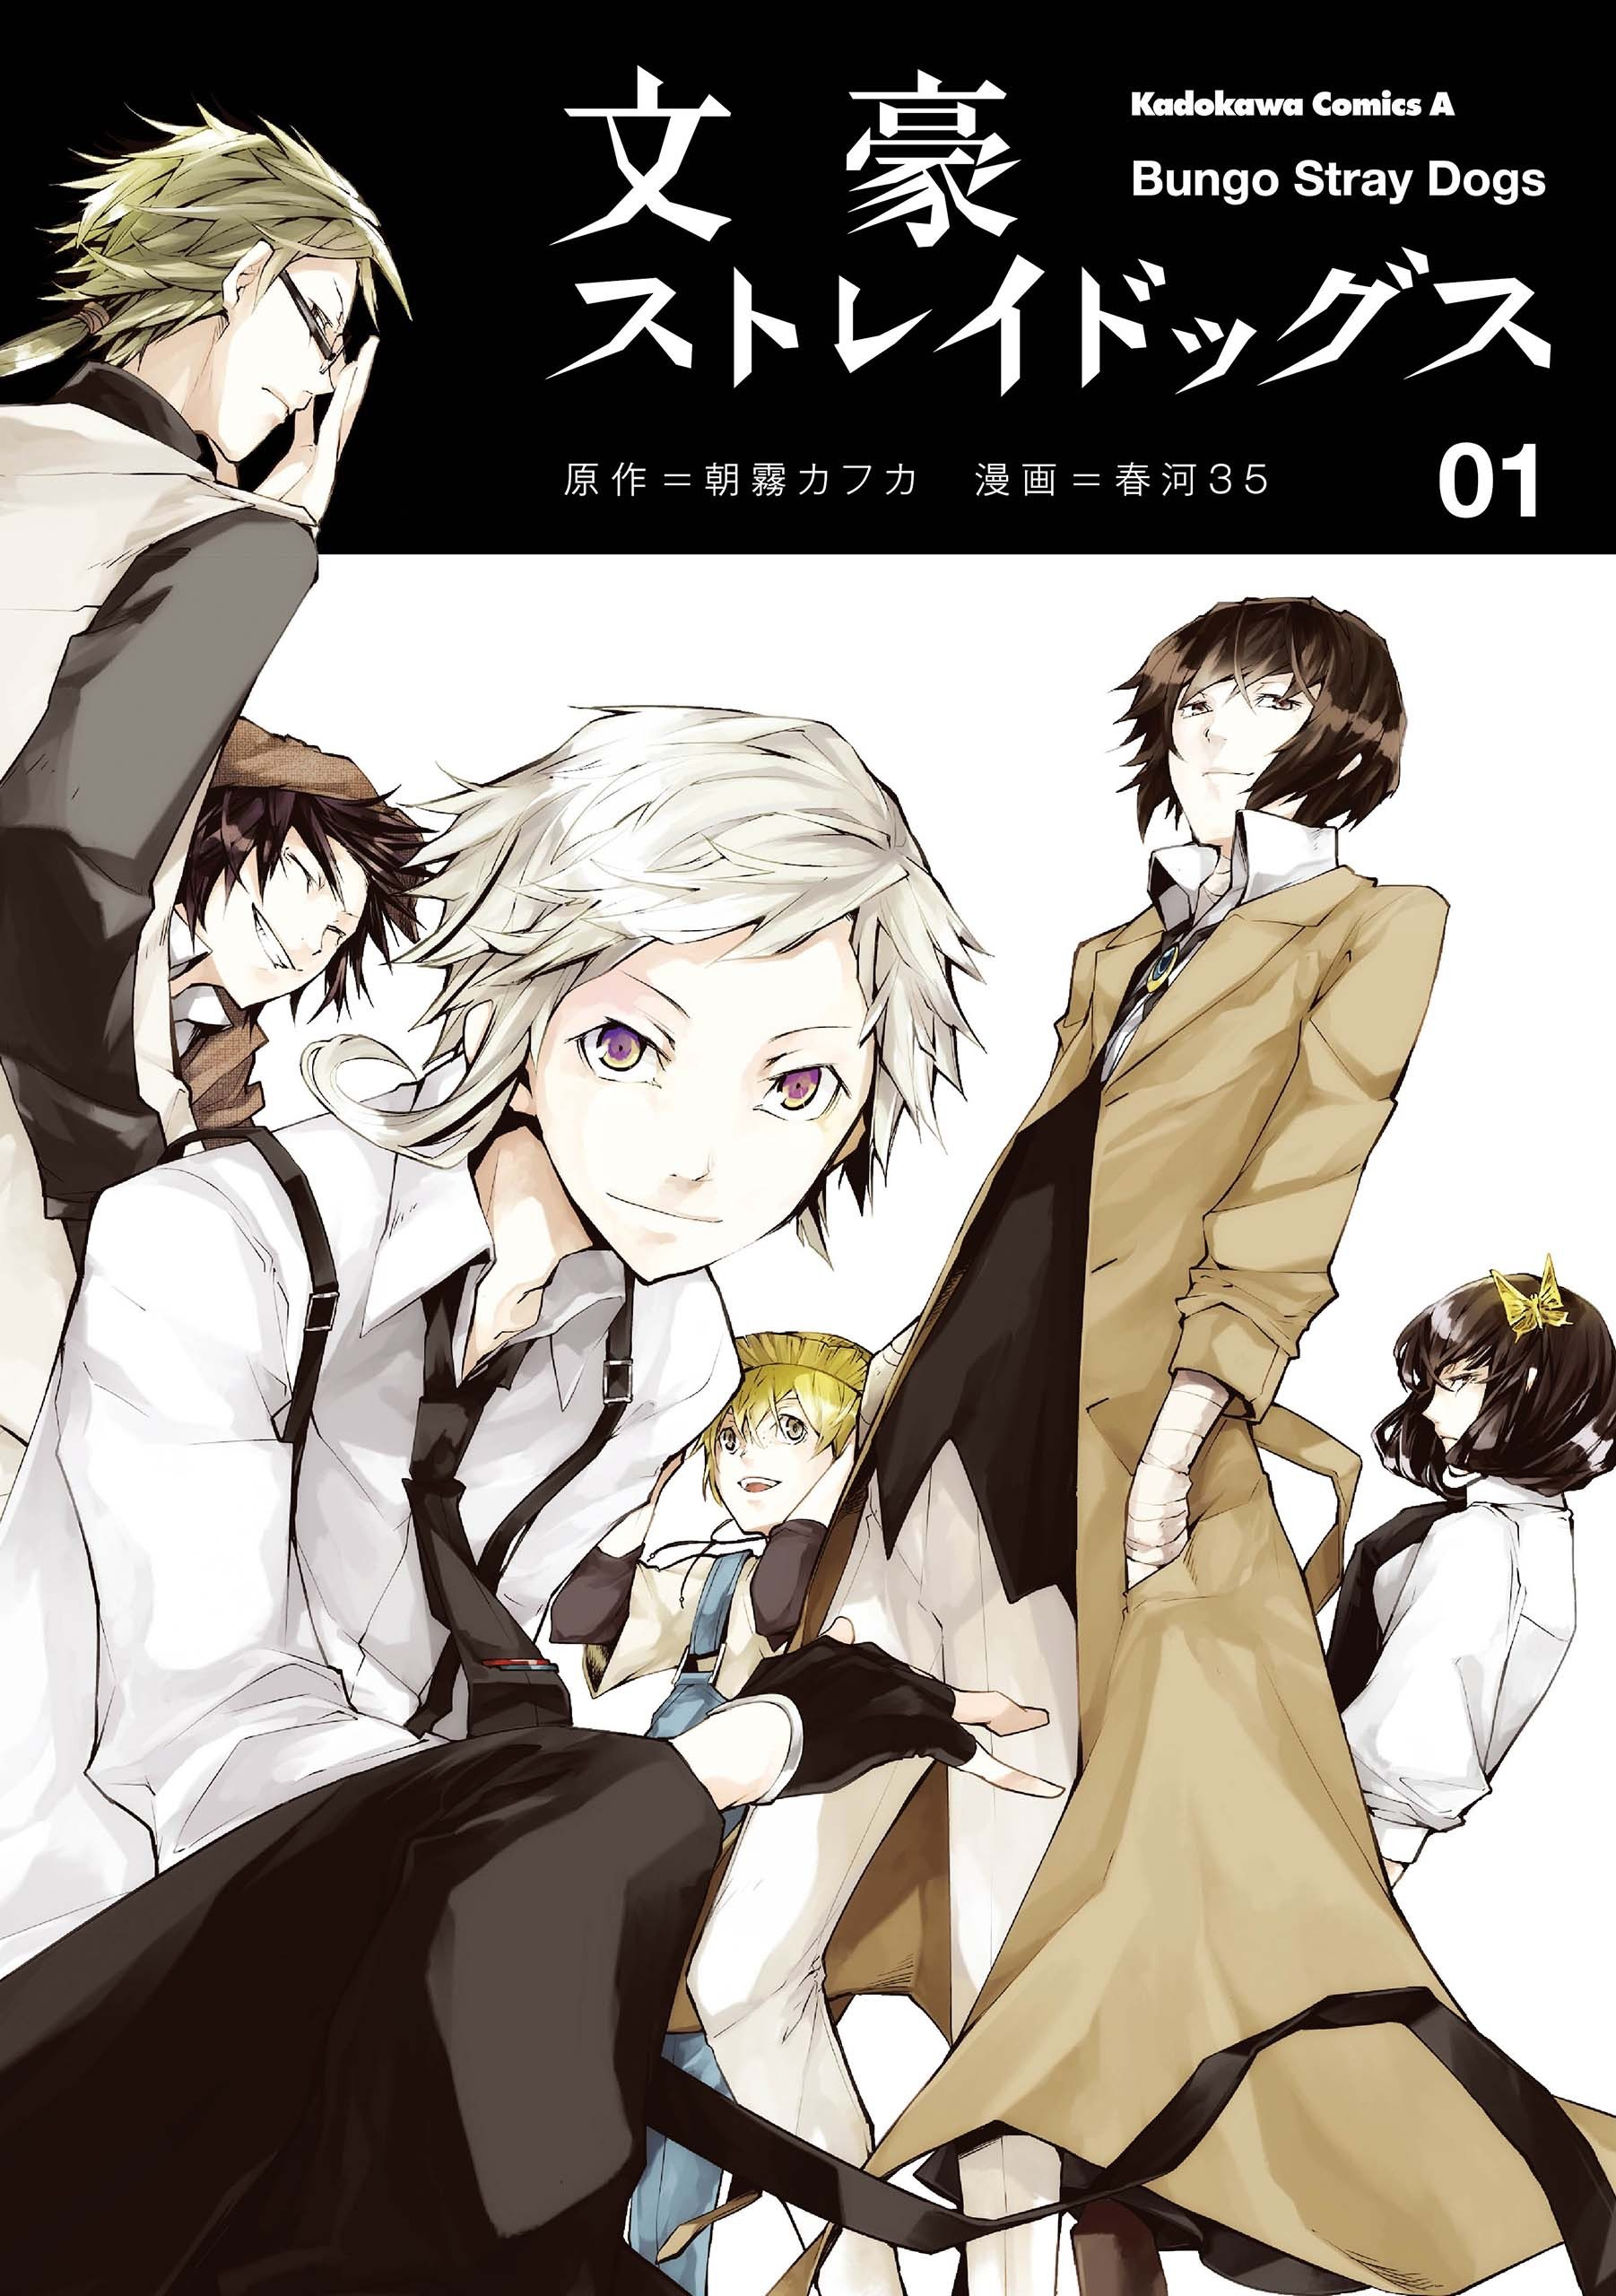 Manga Cover  Zerochan Anime Image Board Mobile